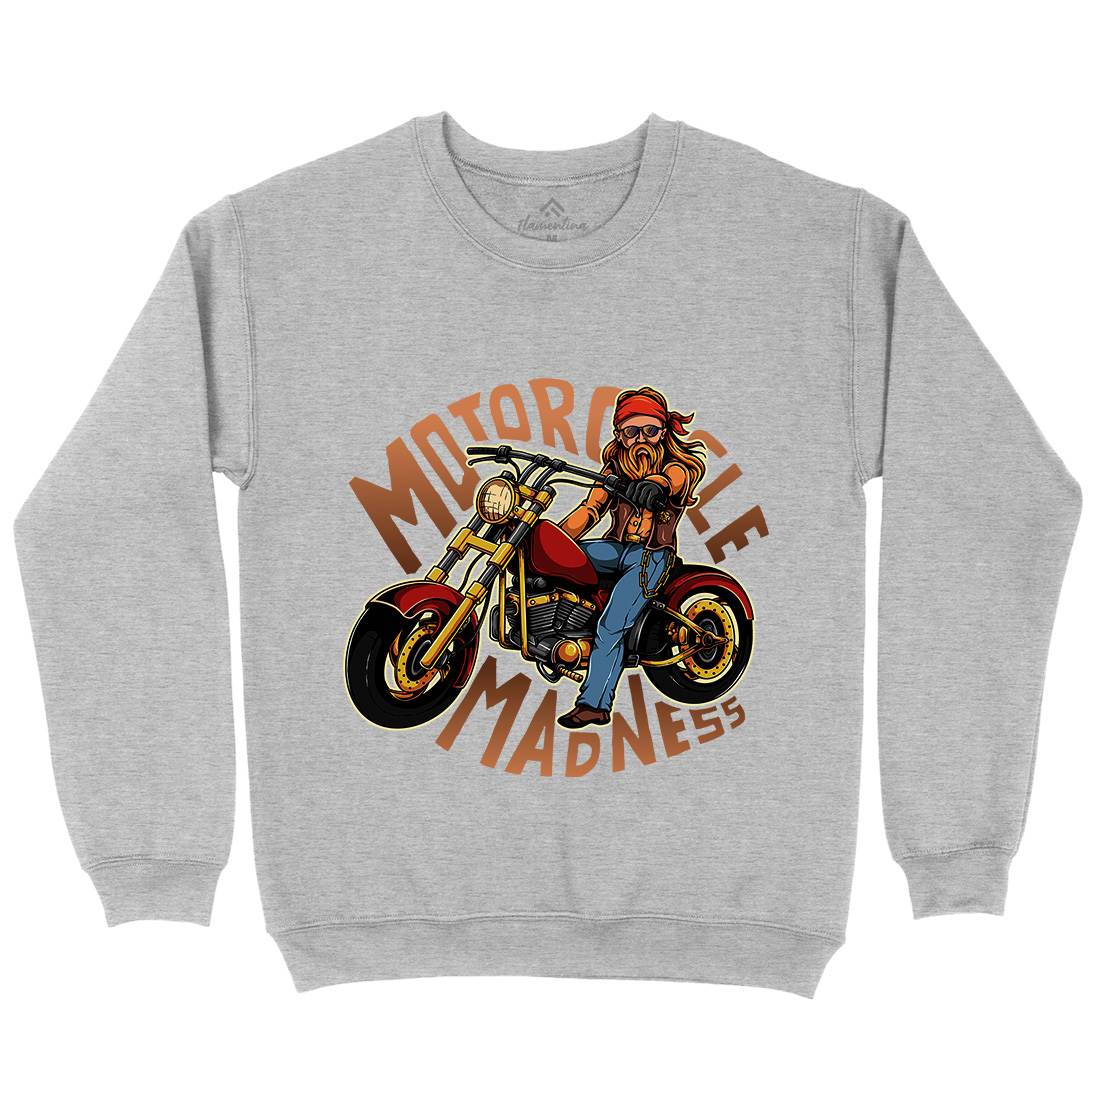 Madness Kids Crew Neck Sweatshirt Motorcycles A438